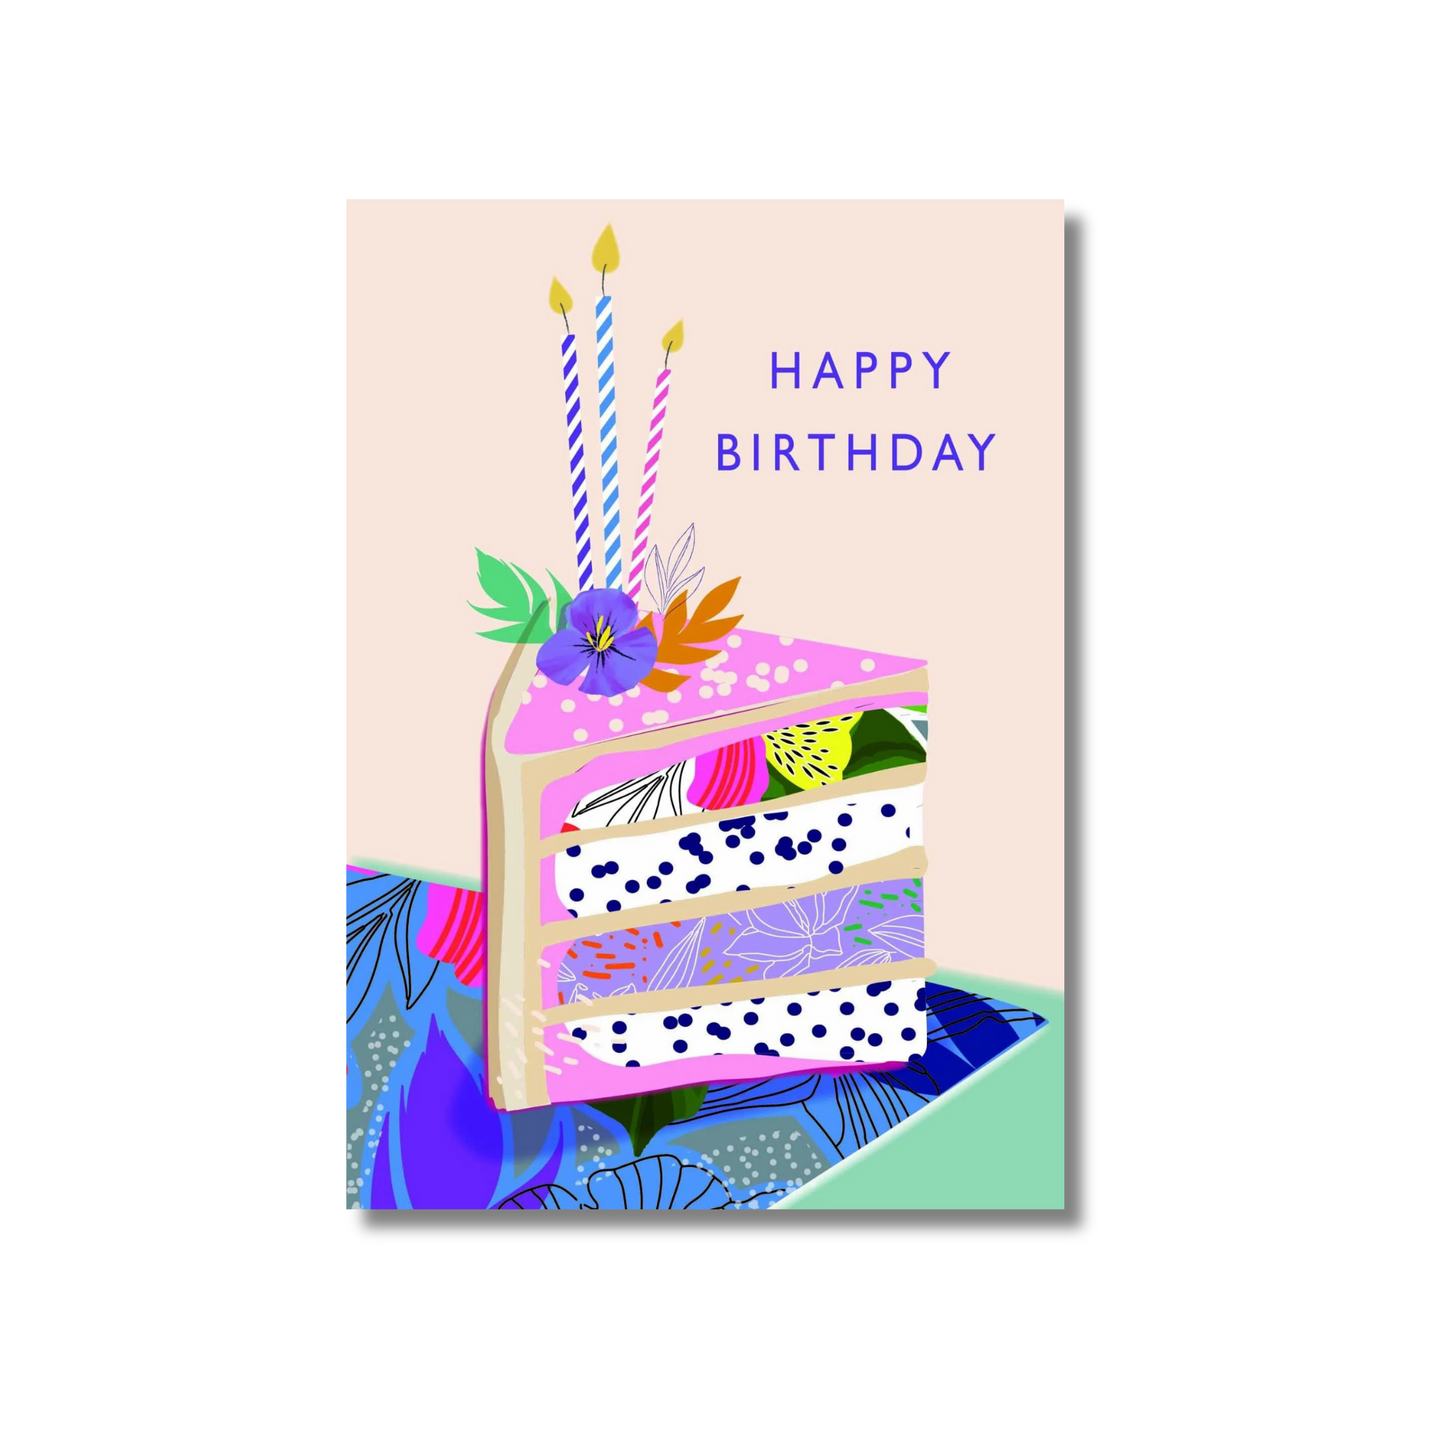 HAPPY BIRTHDAY CAKE GREETING CARD